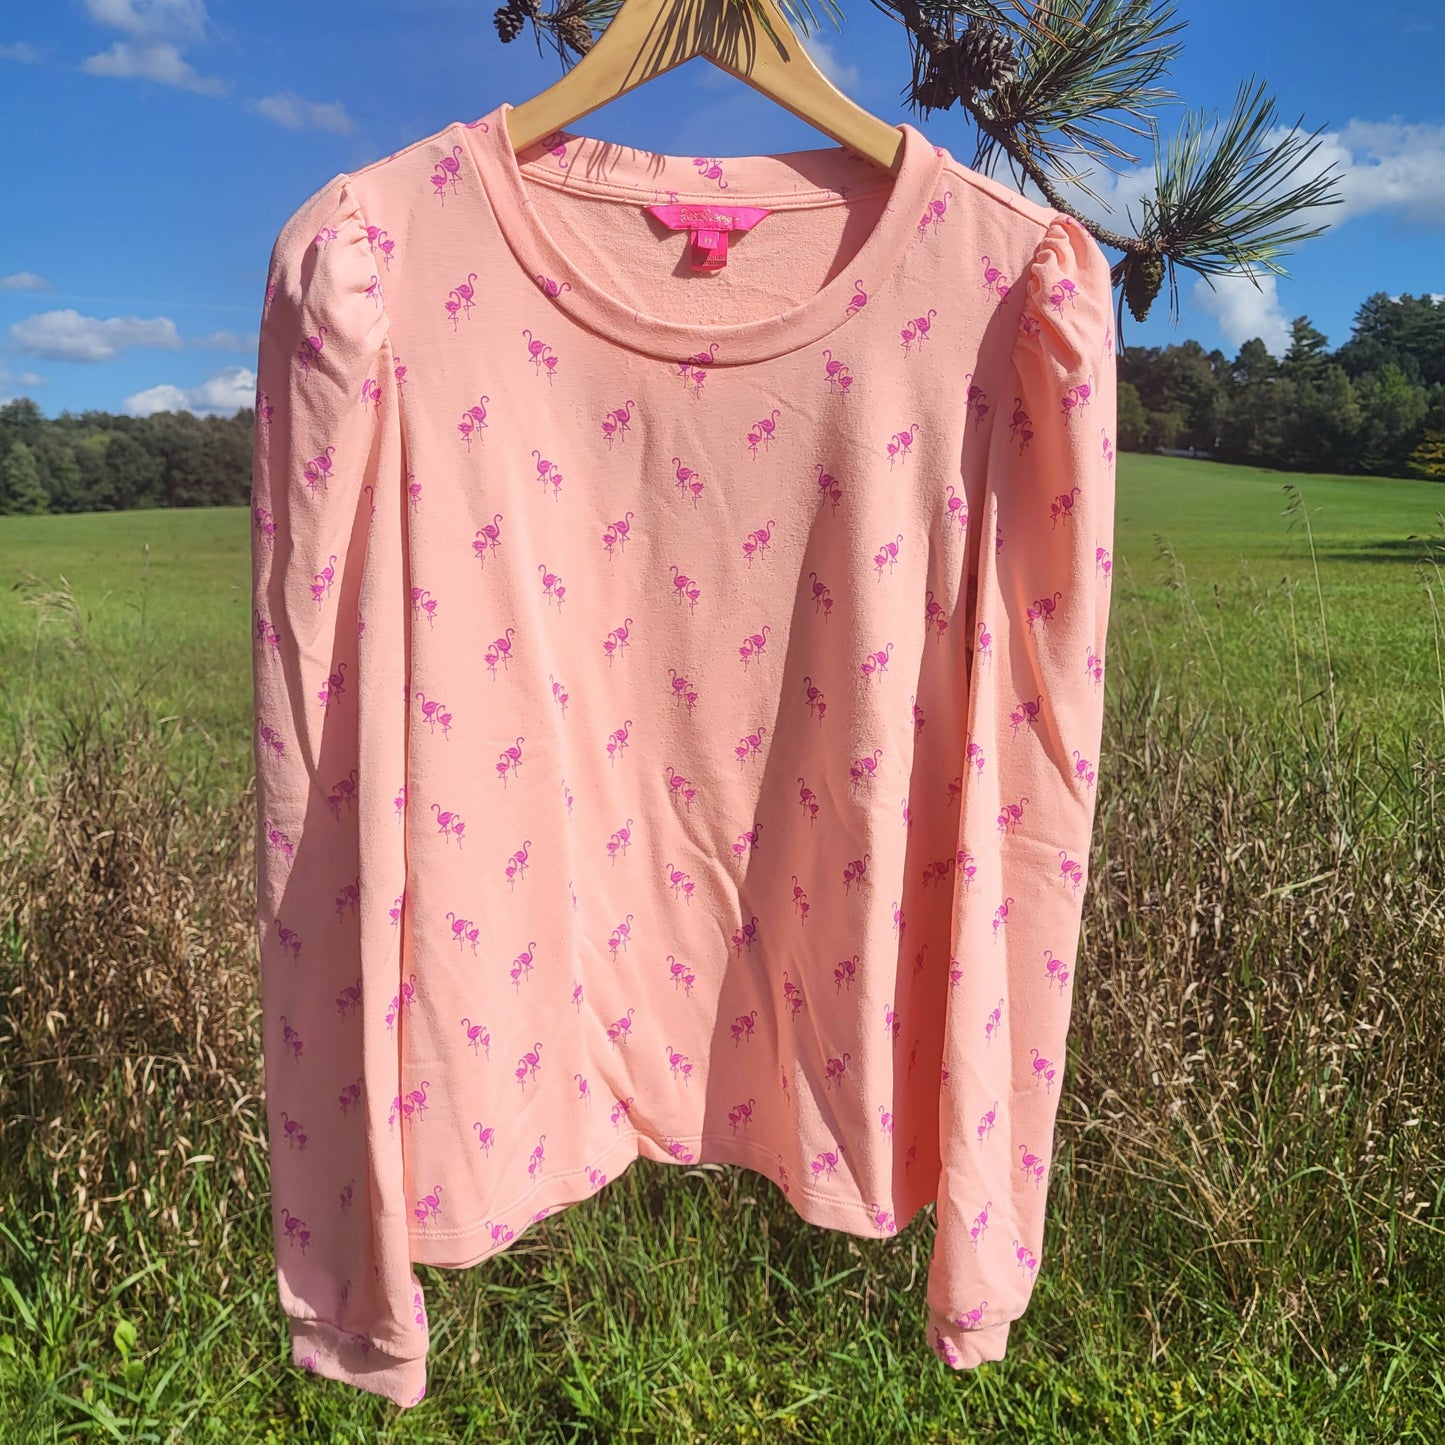 Lilly Pulitzer Puff Sleeve Jansen Sweatshirt - Animal - Pink/Peach Hyacinth Me And My Minnie - M